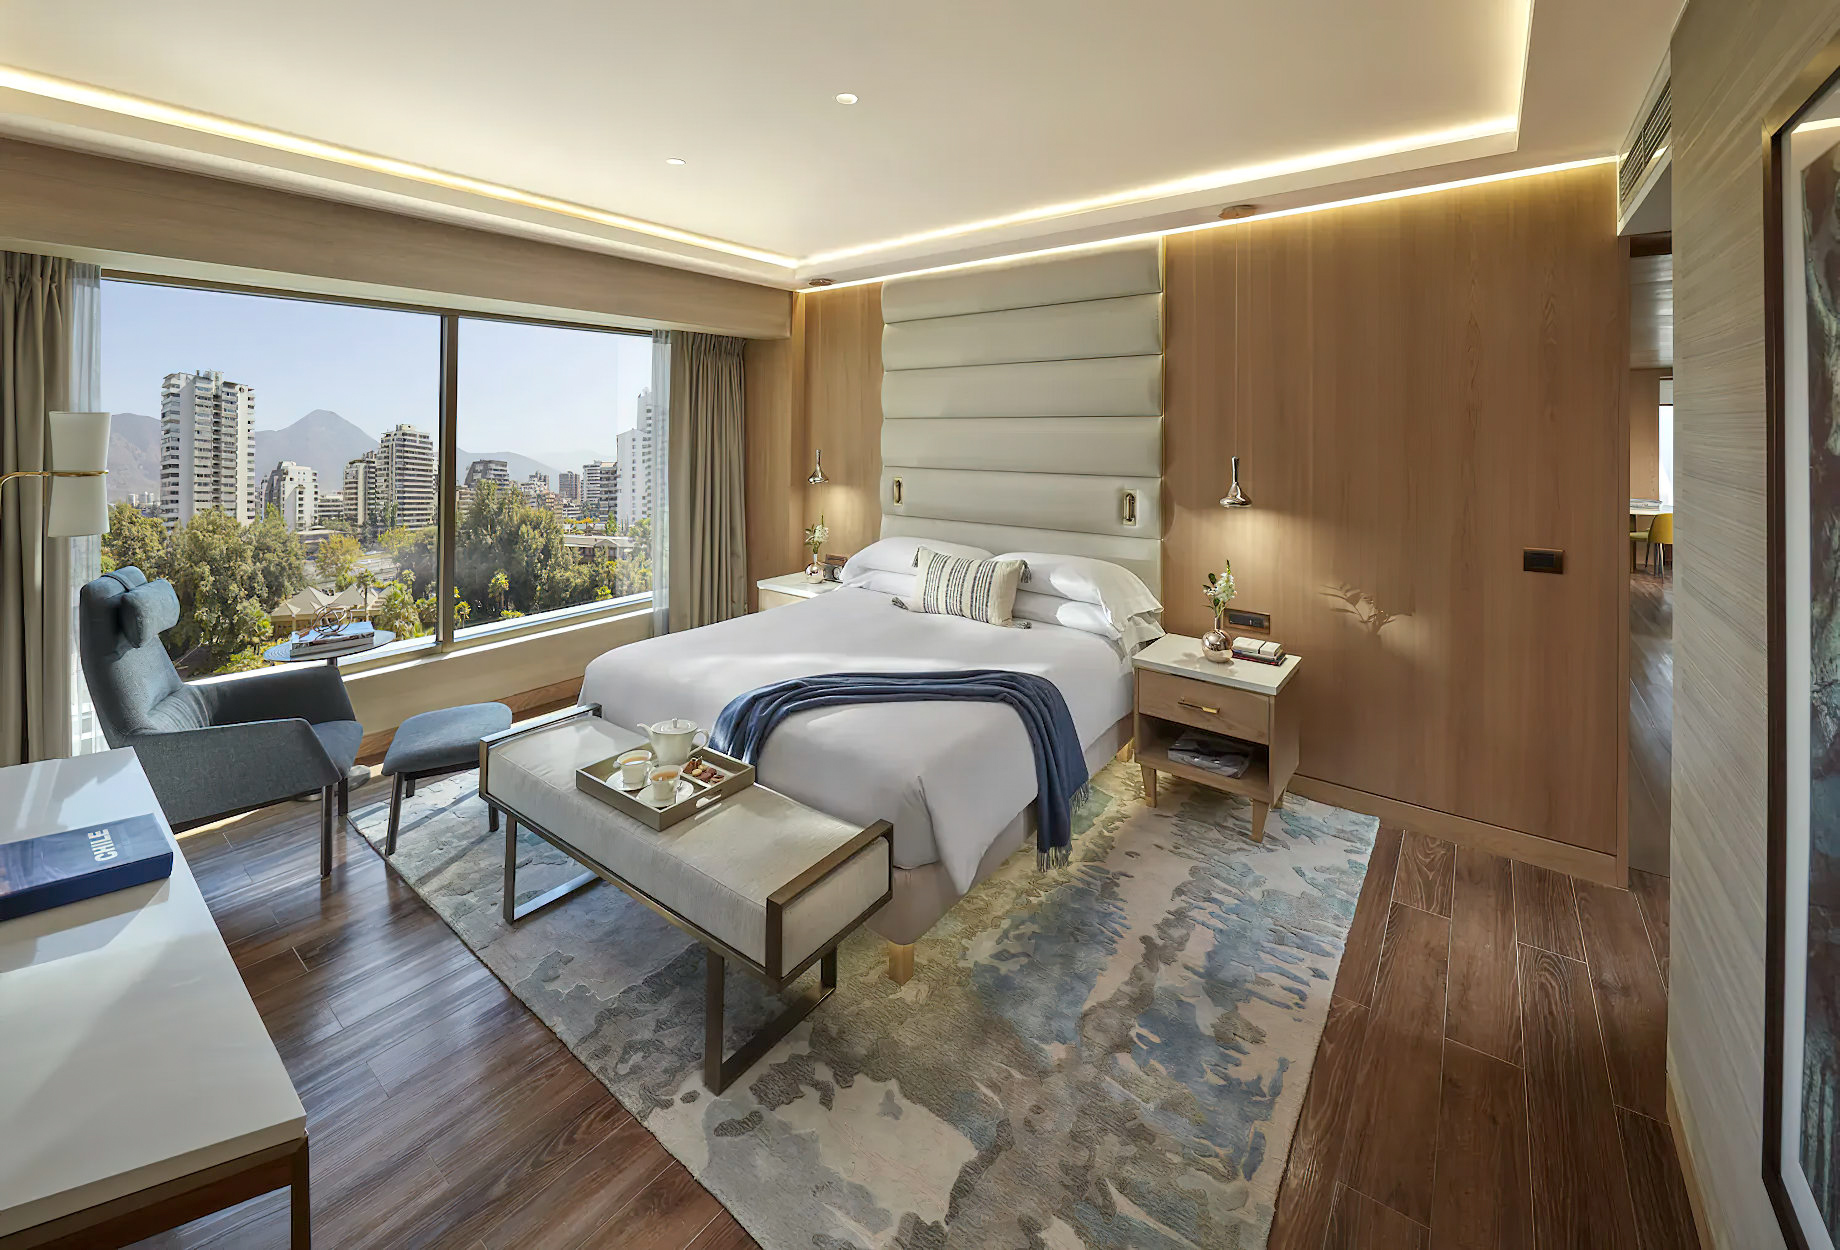 Mandarin Oriental, Santiago Hotel - Santiago, Chile - Guest Suite Bedroom